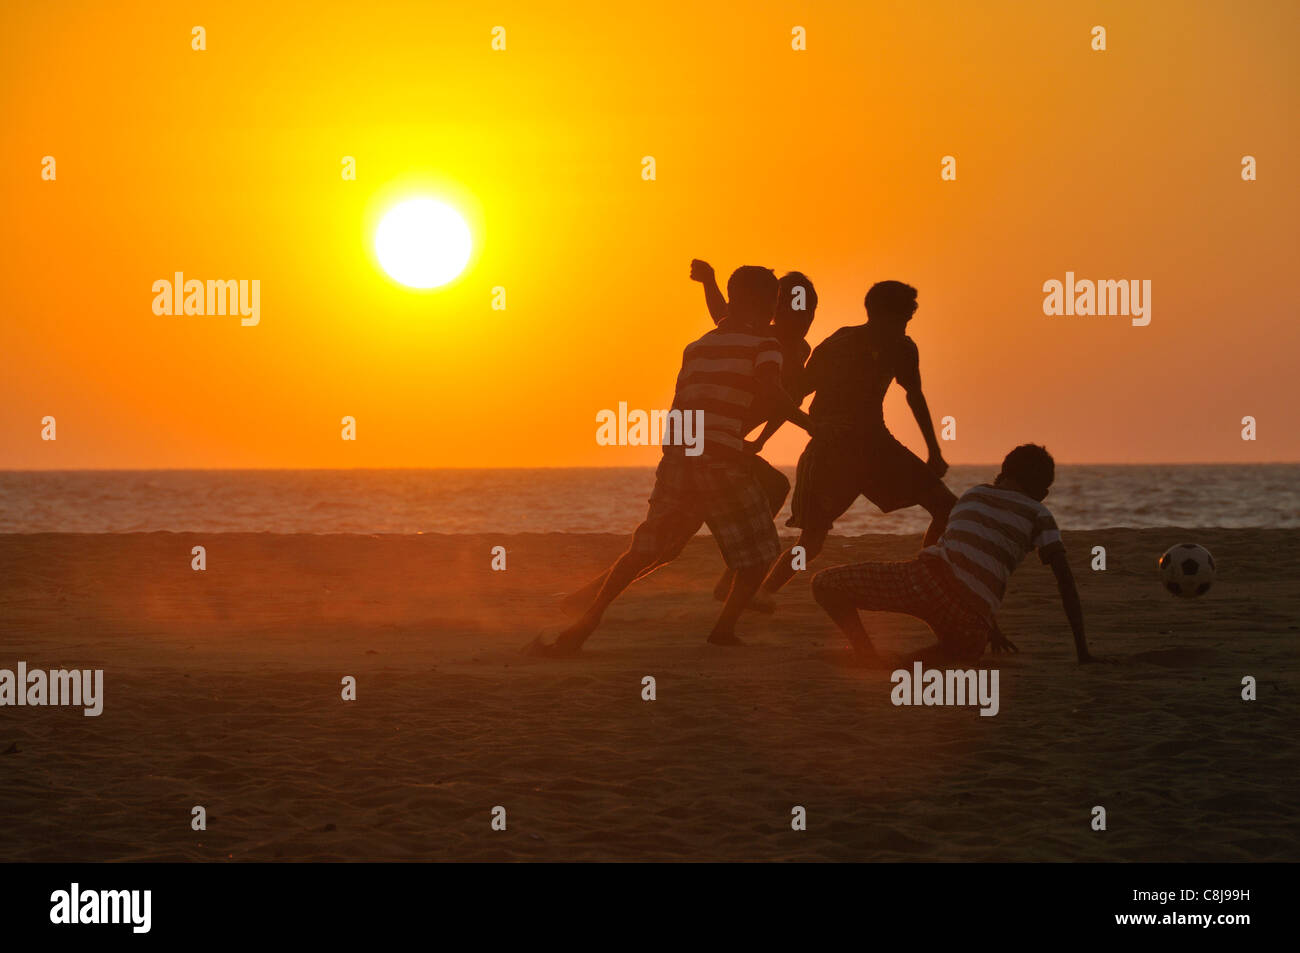 Evening, dusk, evening light, evening sun, evening mood, Asia, Ceylon, leisure, activity, football, soccer, player, footballer, Stock Photo